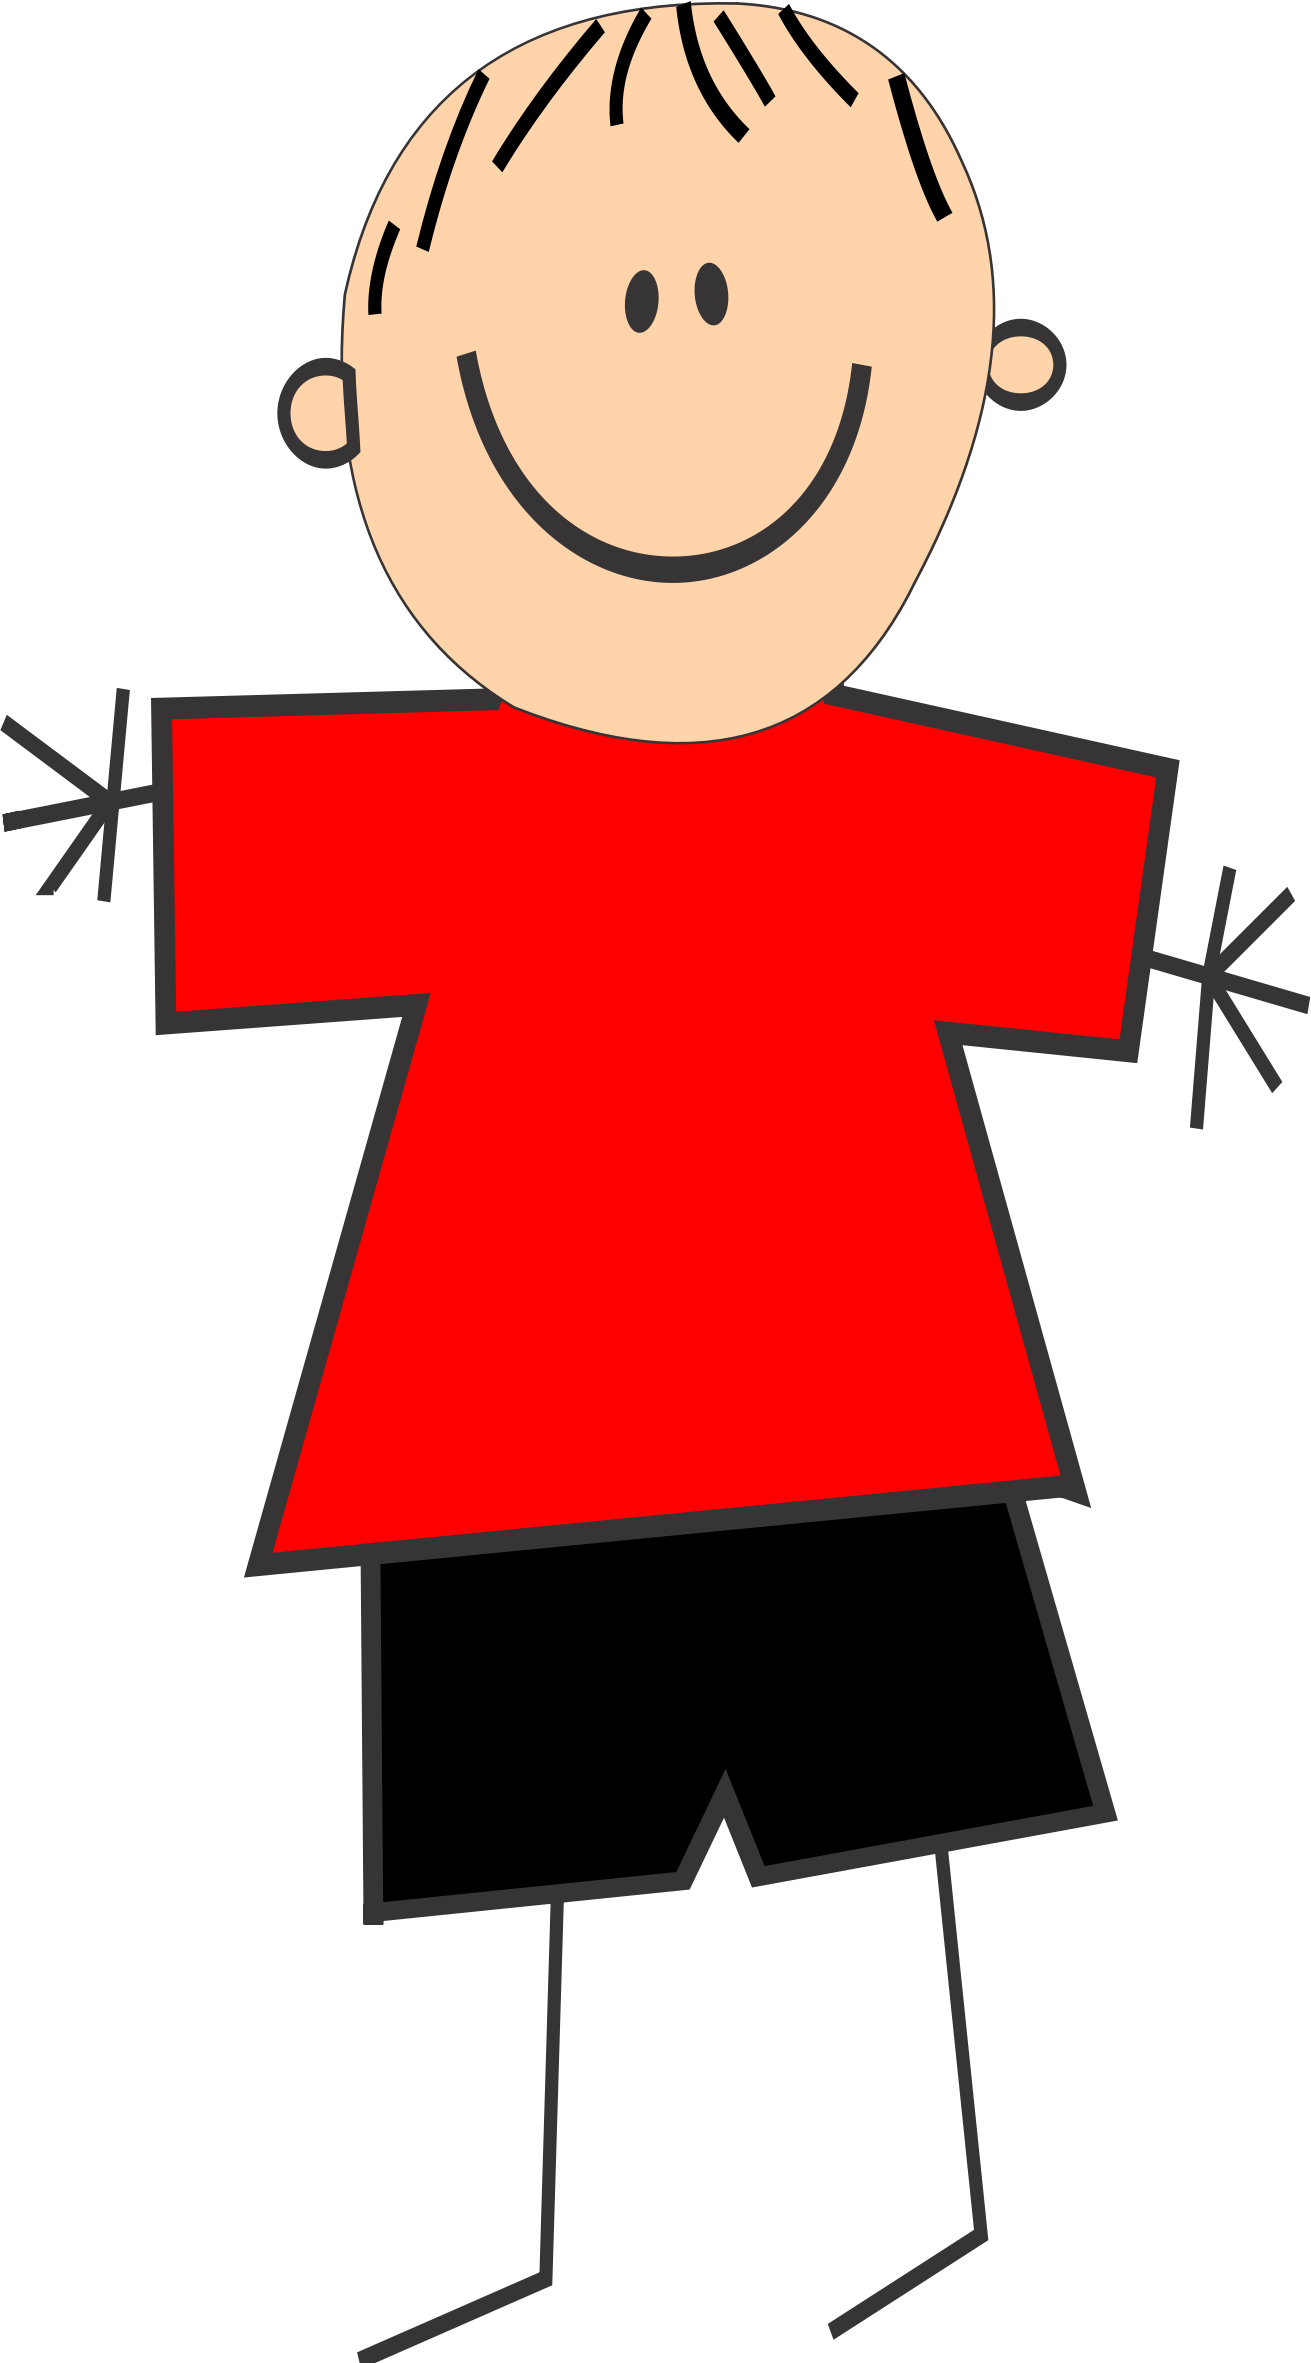 Shirts clipart cartoon. Boy with red shirt